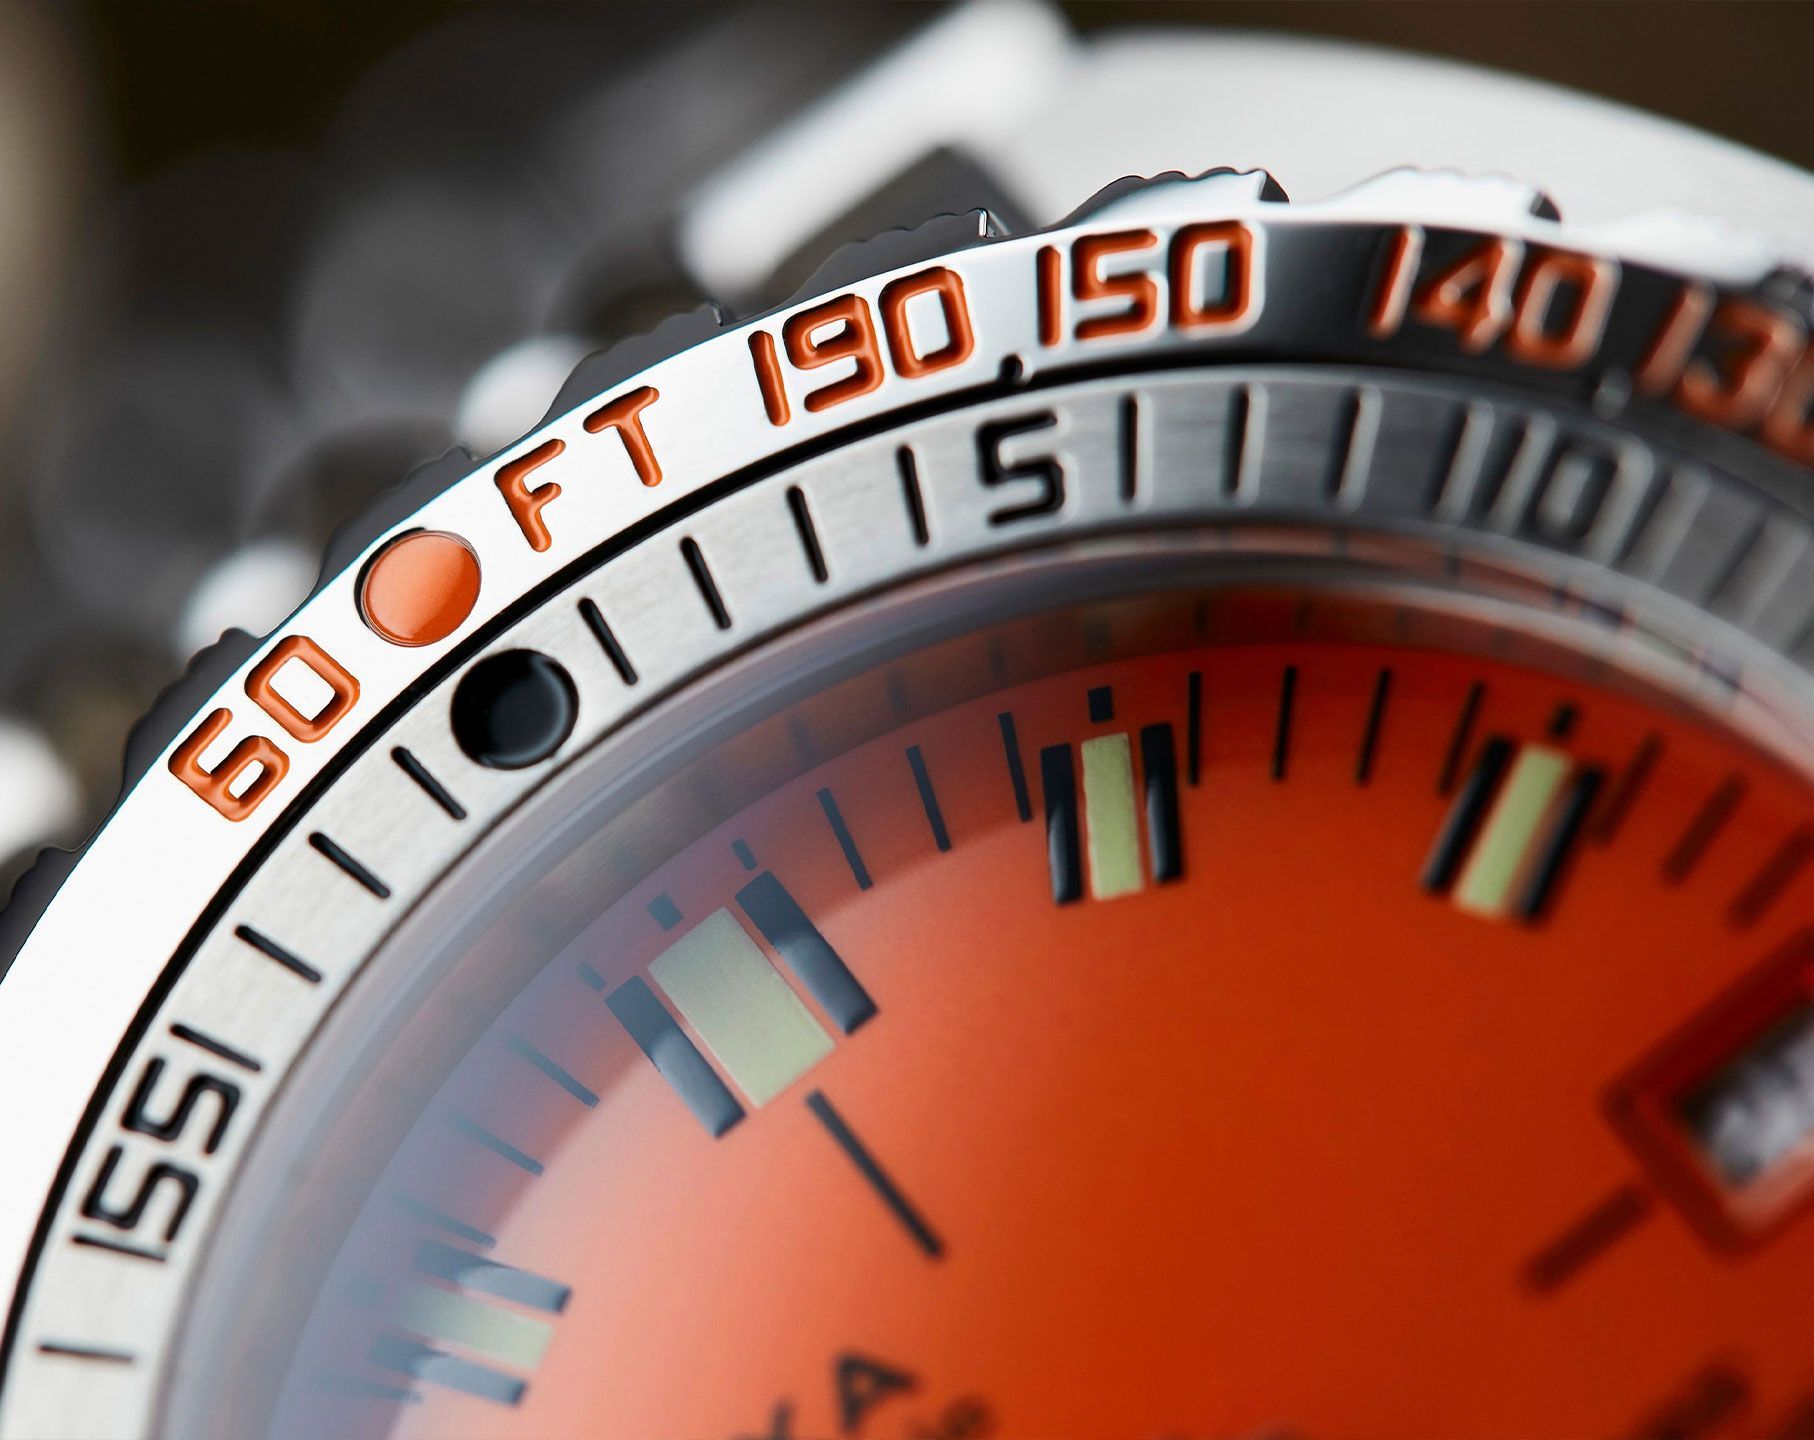 Doxa Professional 42.5 mm Watch in Orange Dial For Men - 6